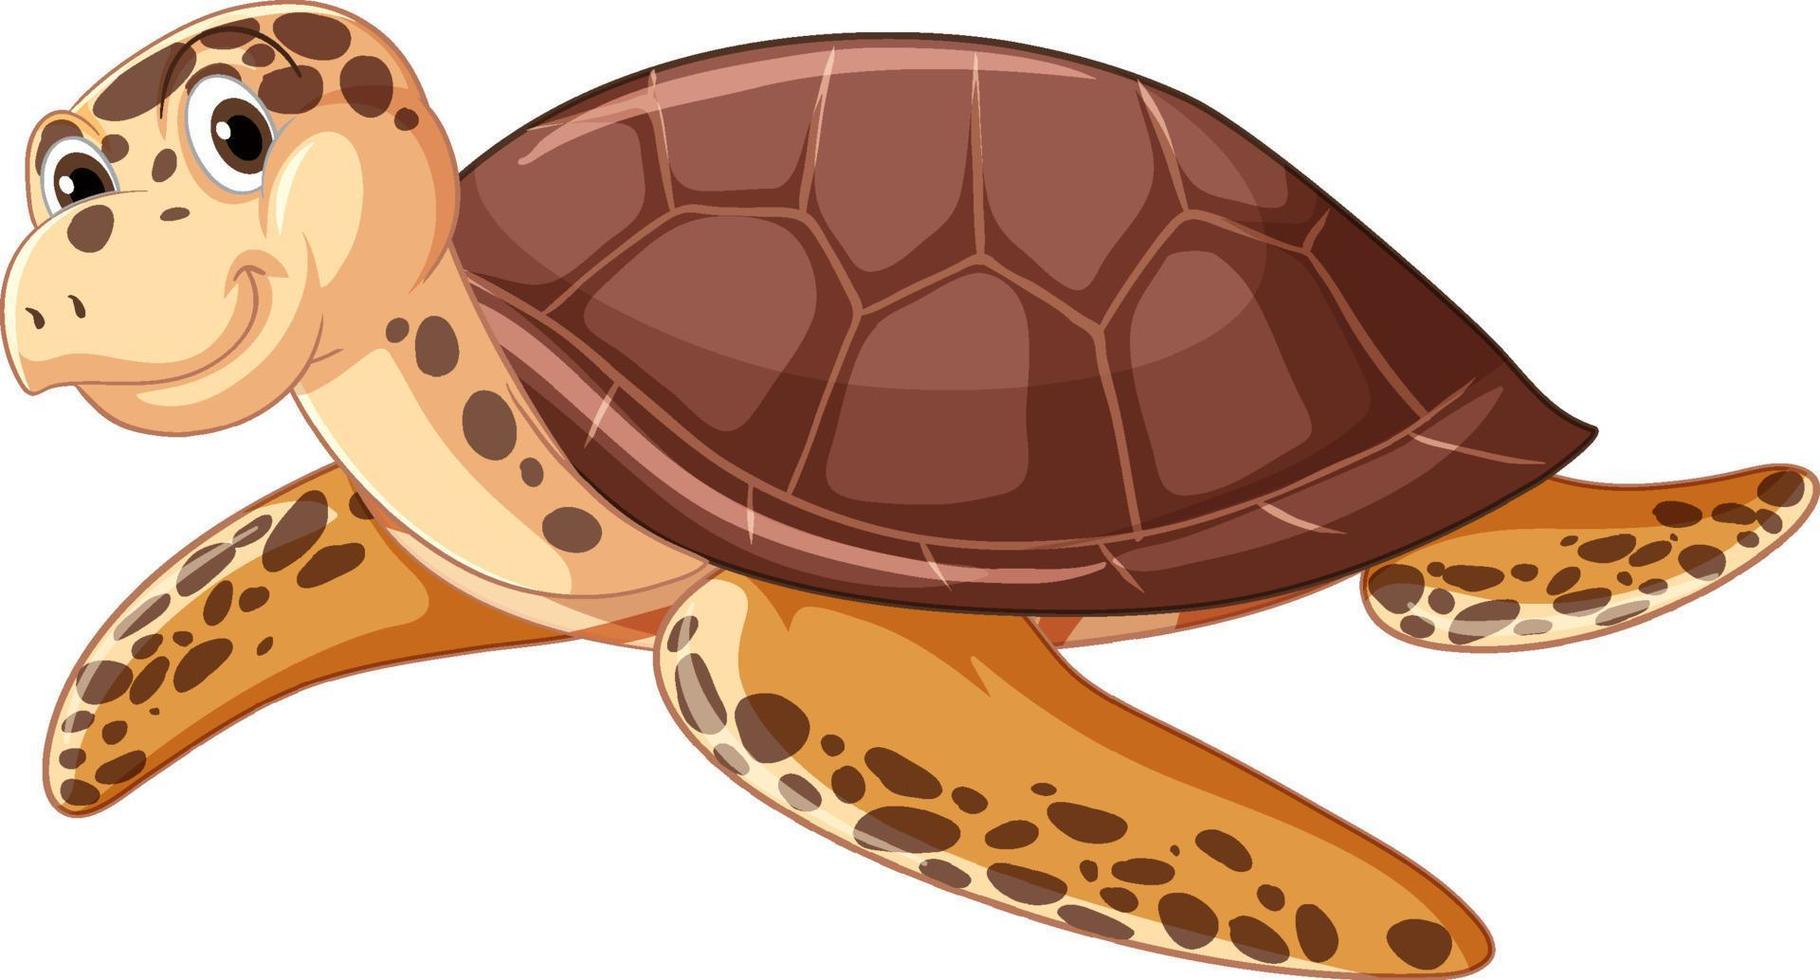 Cute sea turtle cartoon character vector